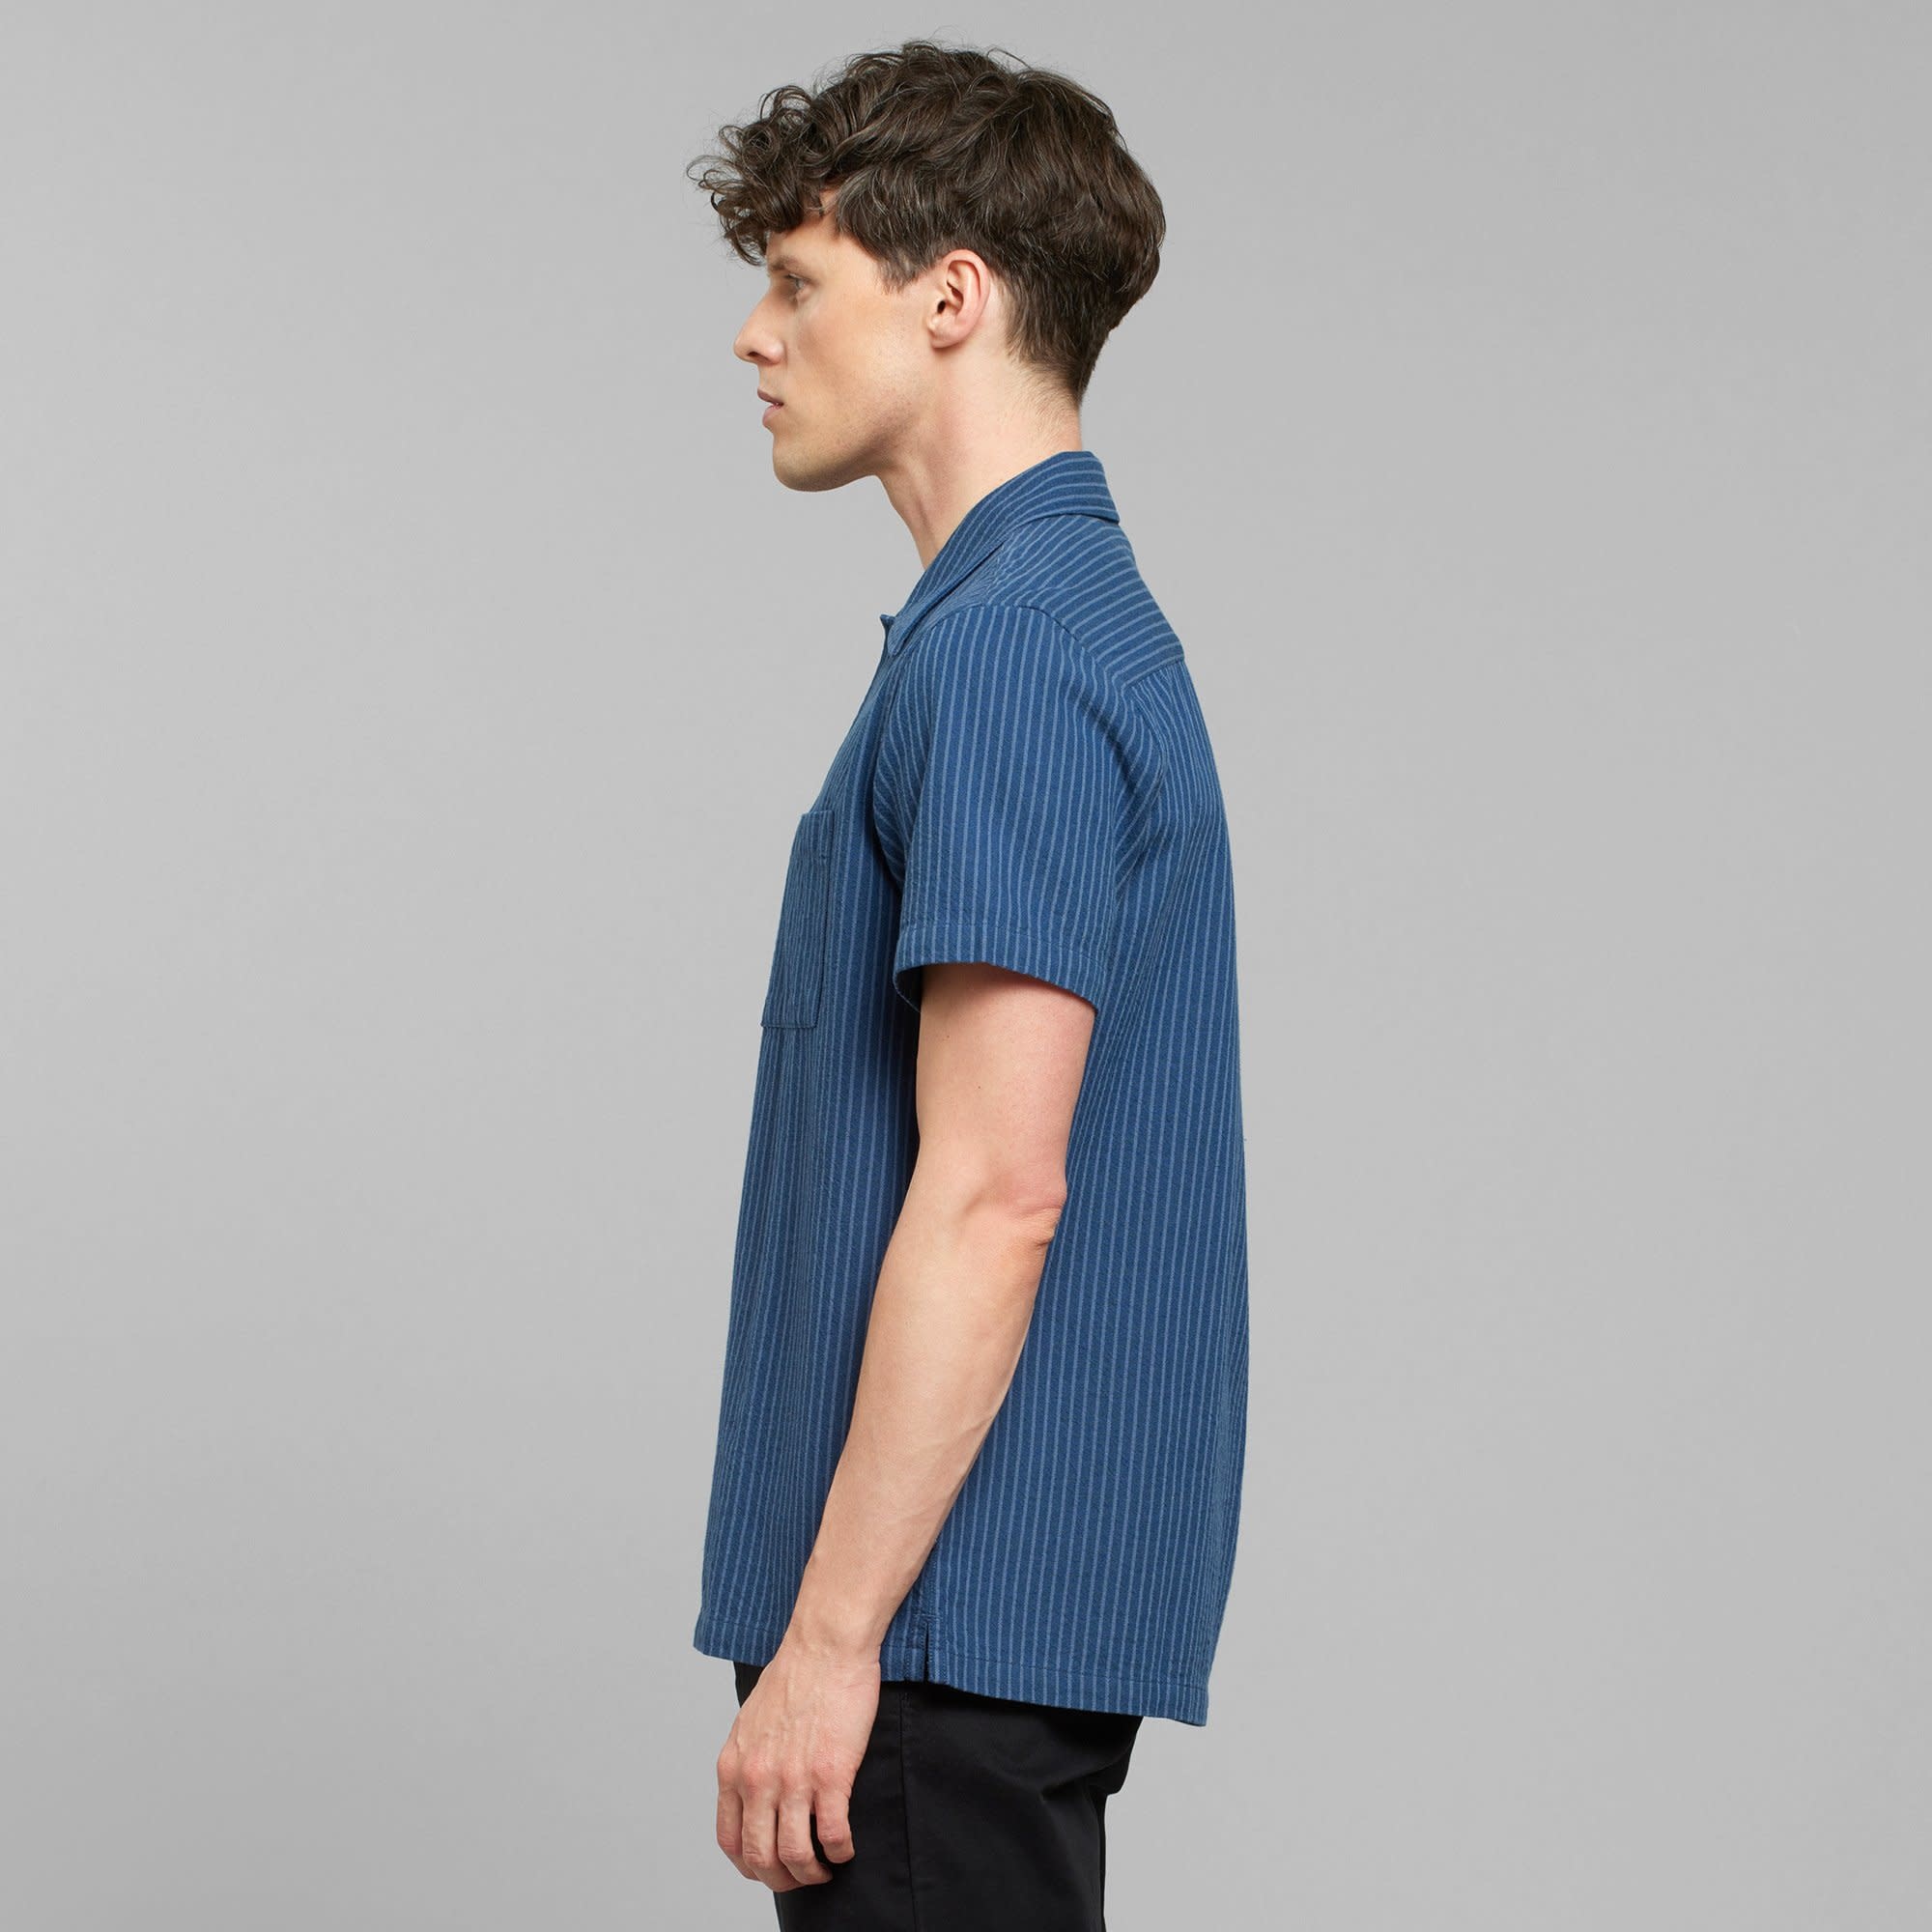 Dedicated Dedicated, Shirt Brantevik Work Stripe, dark blue, XL